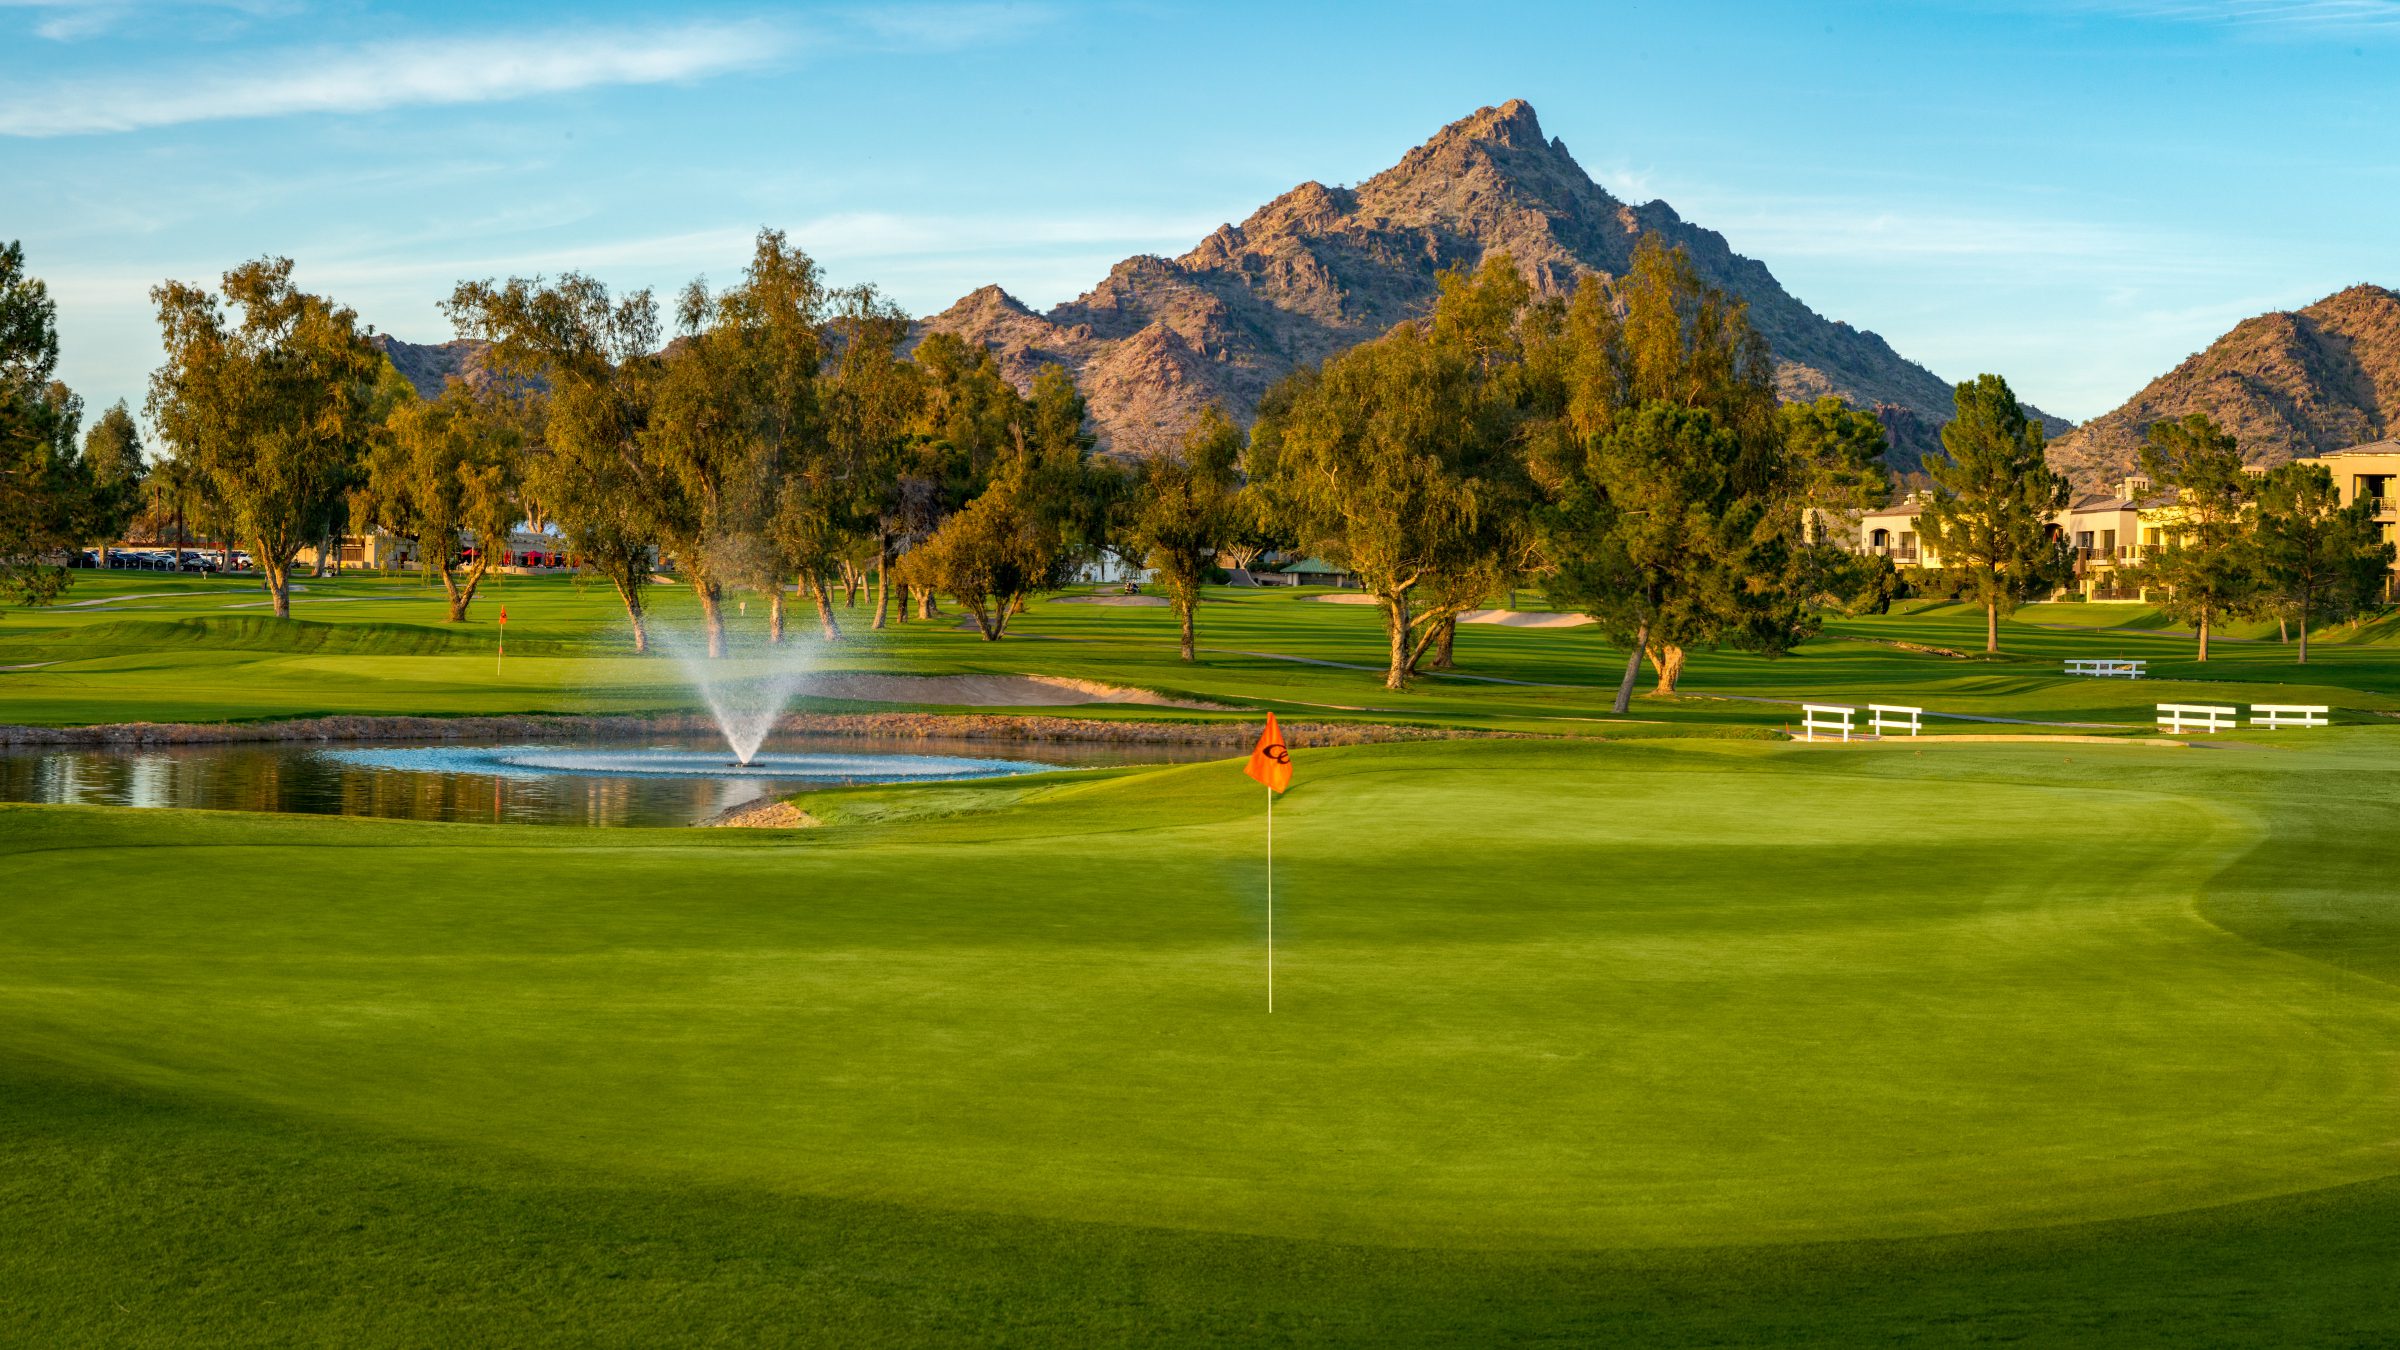 Arizona Biltmore Golf Course
Adobe Course, Hole #3 / Hole #4 combo